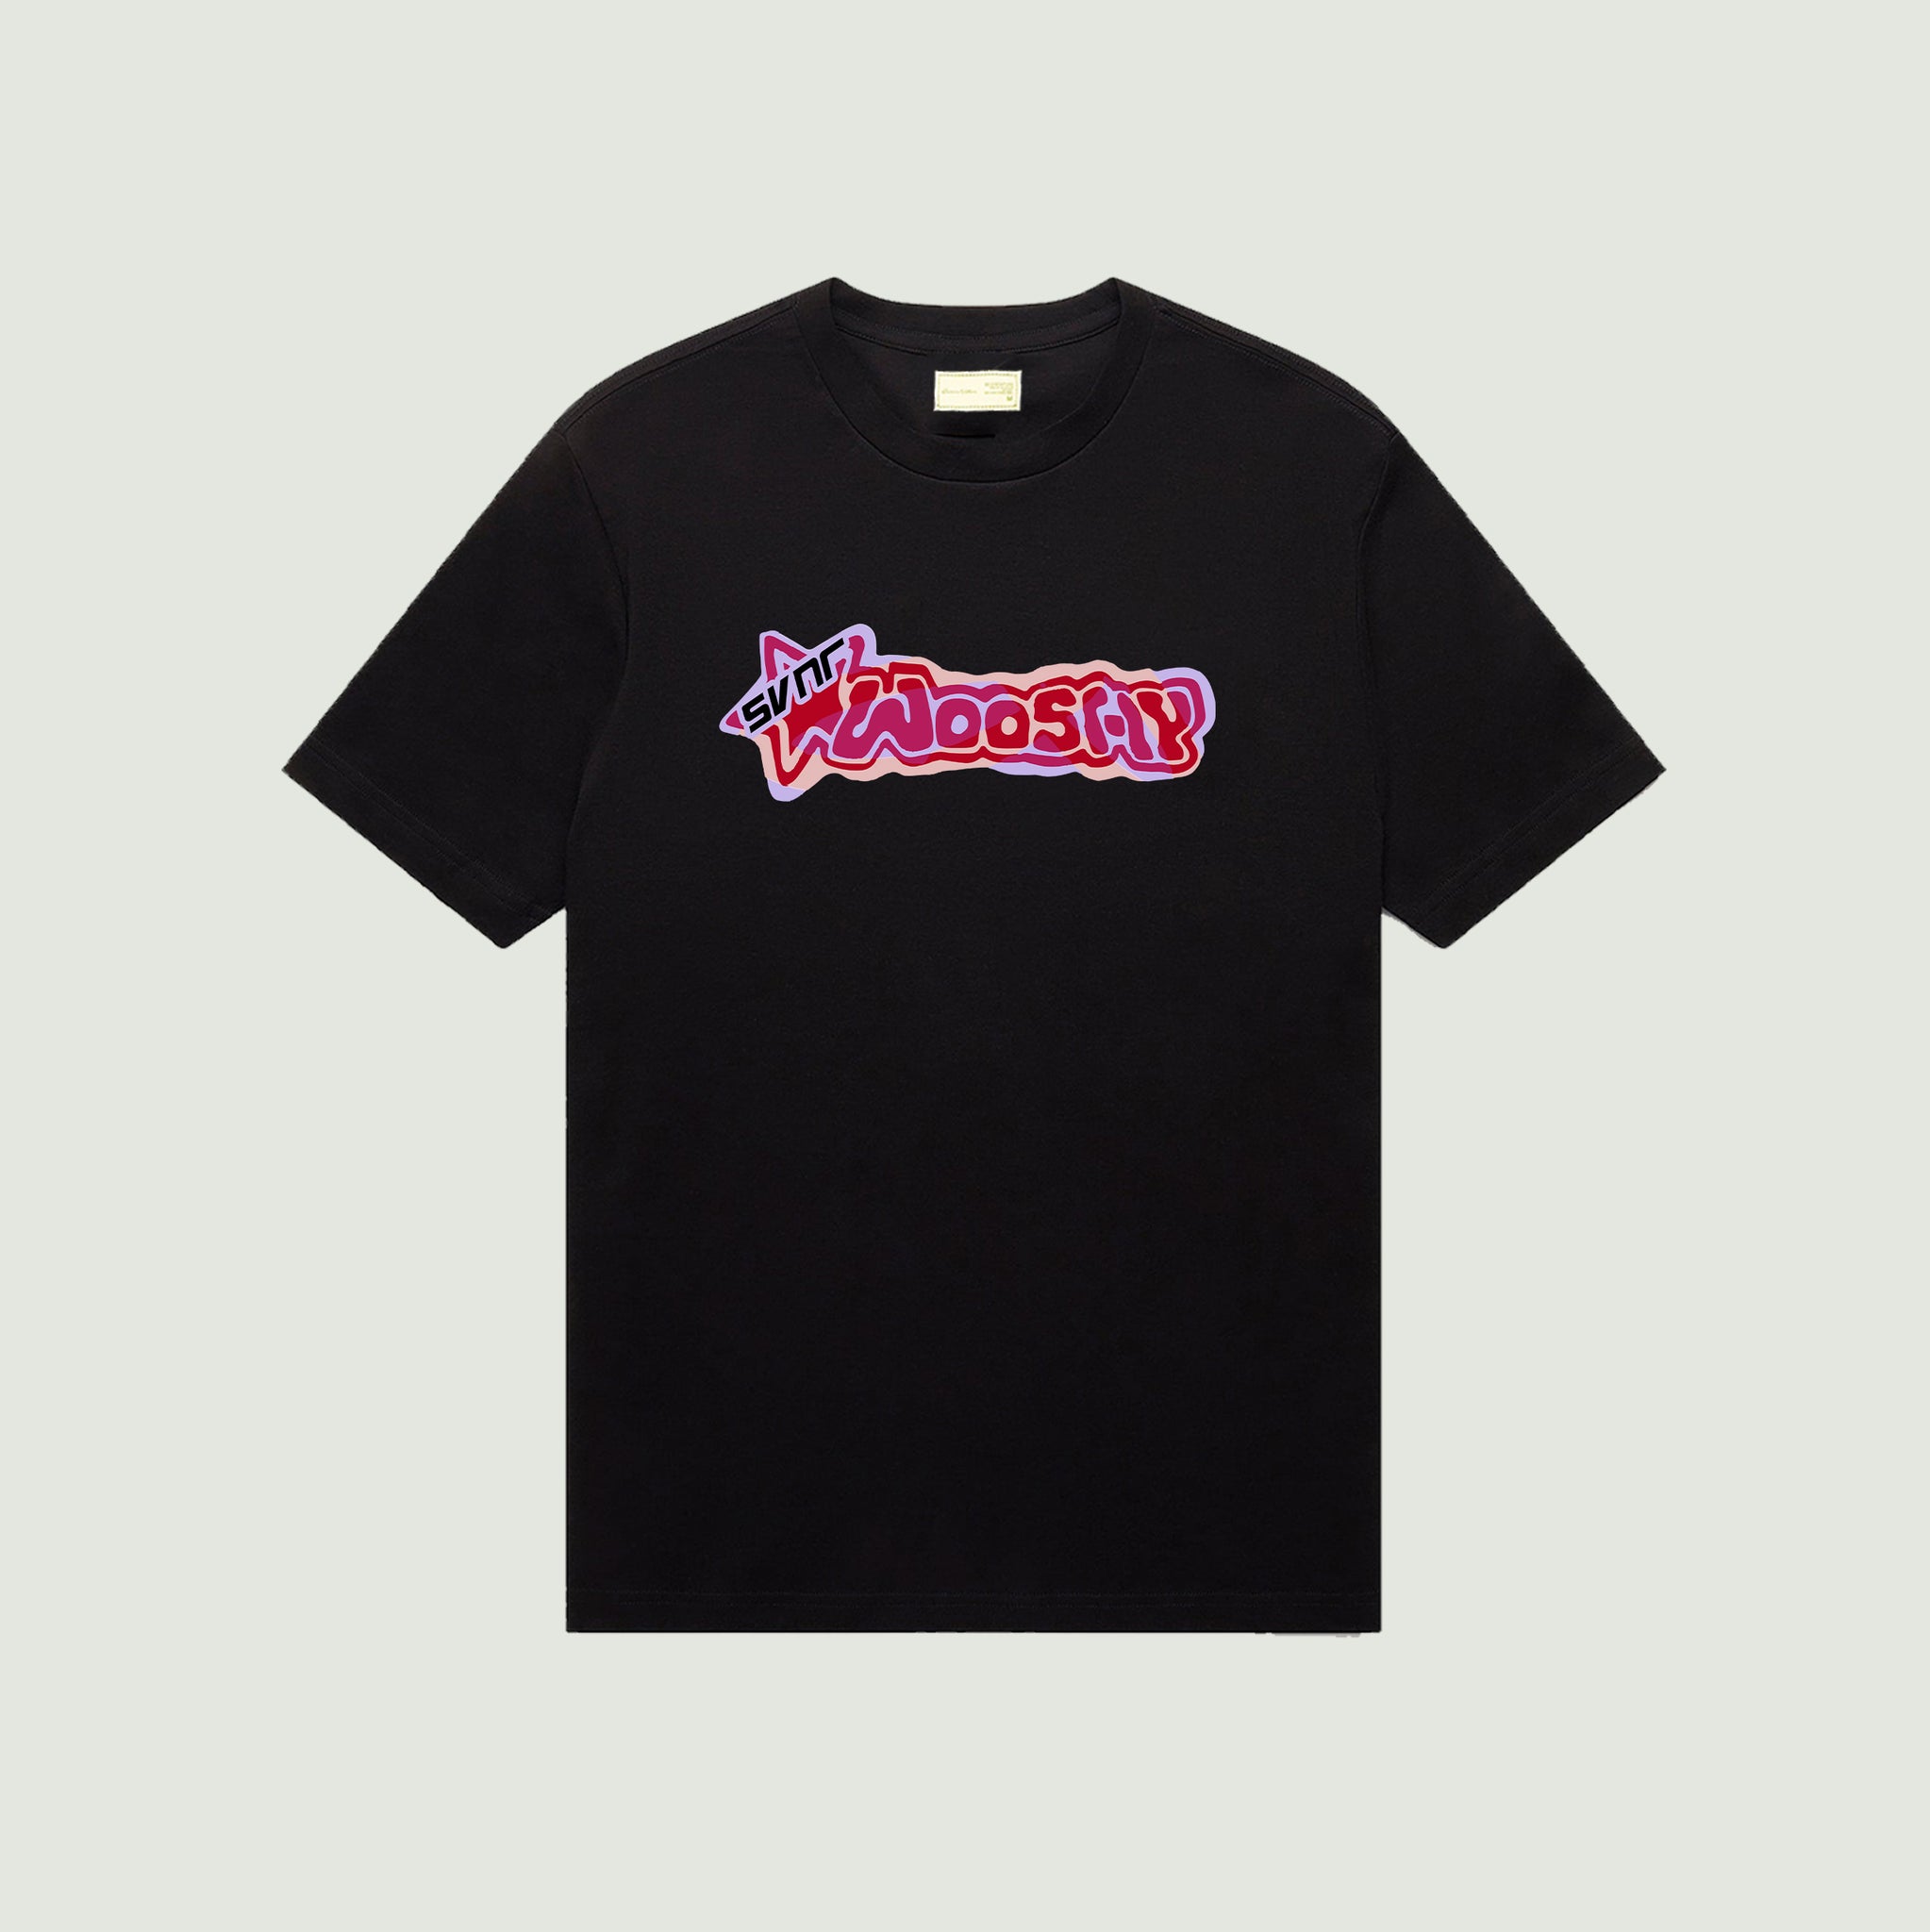 SVNR x Wooshy's World "Logo Tee" in Black & Pink